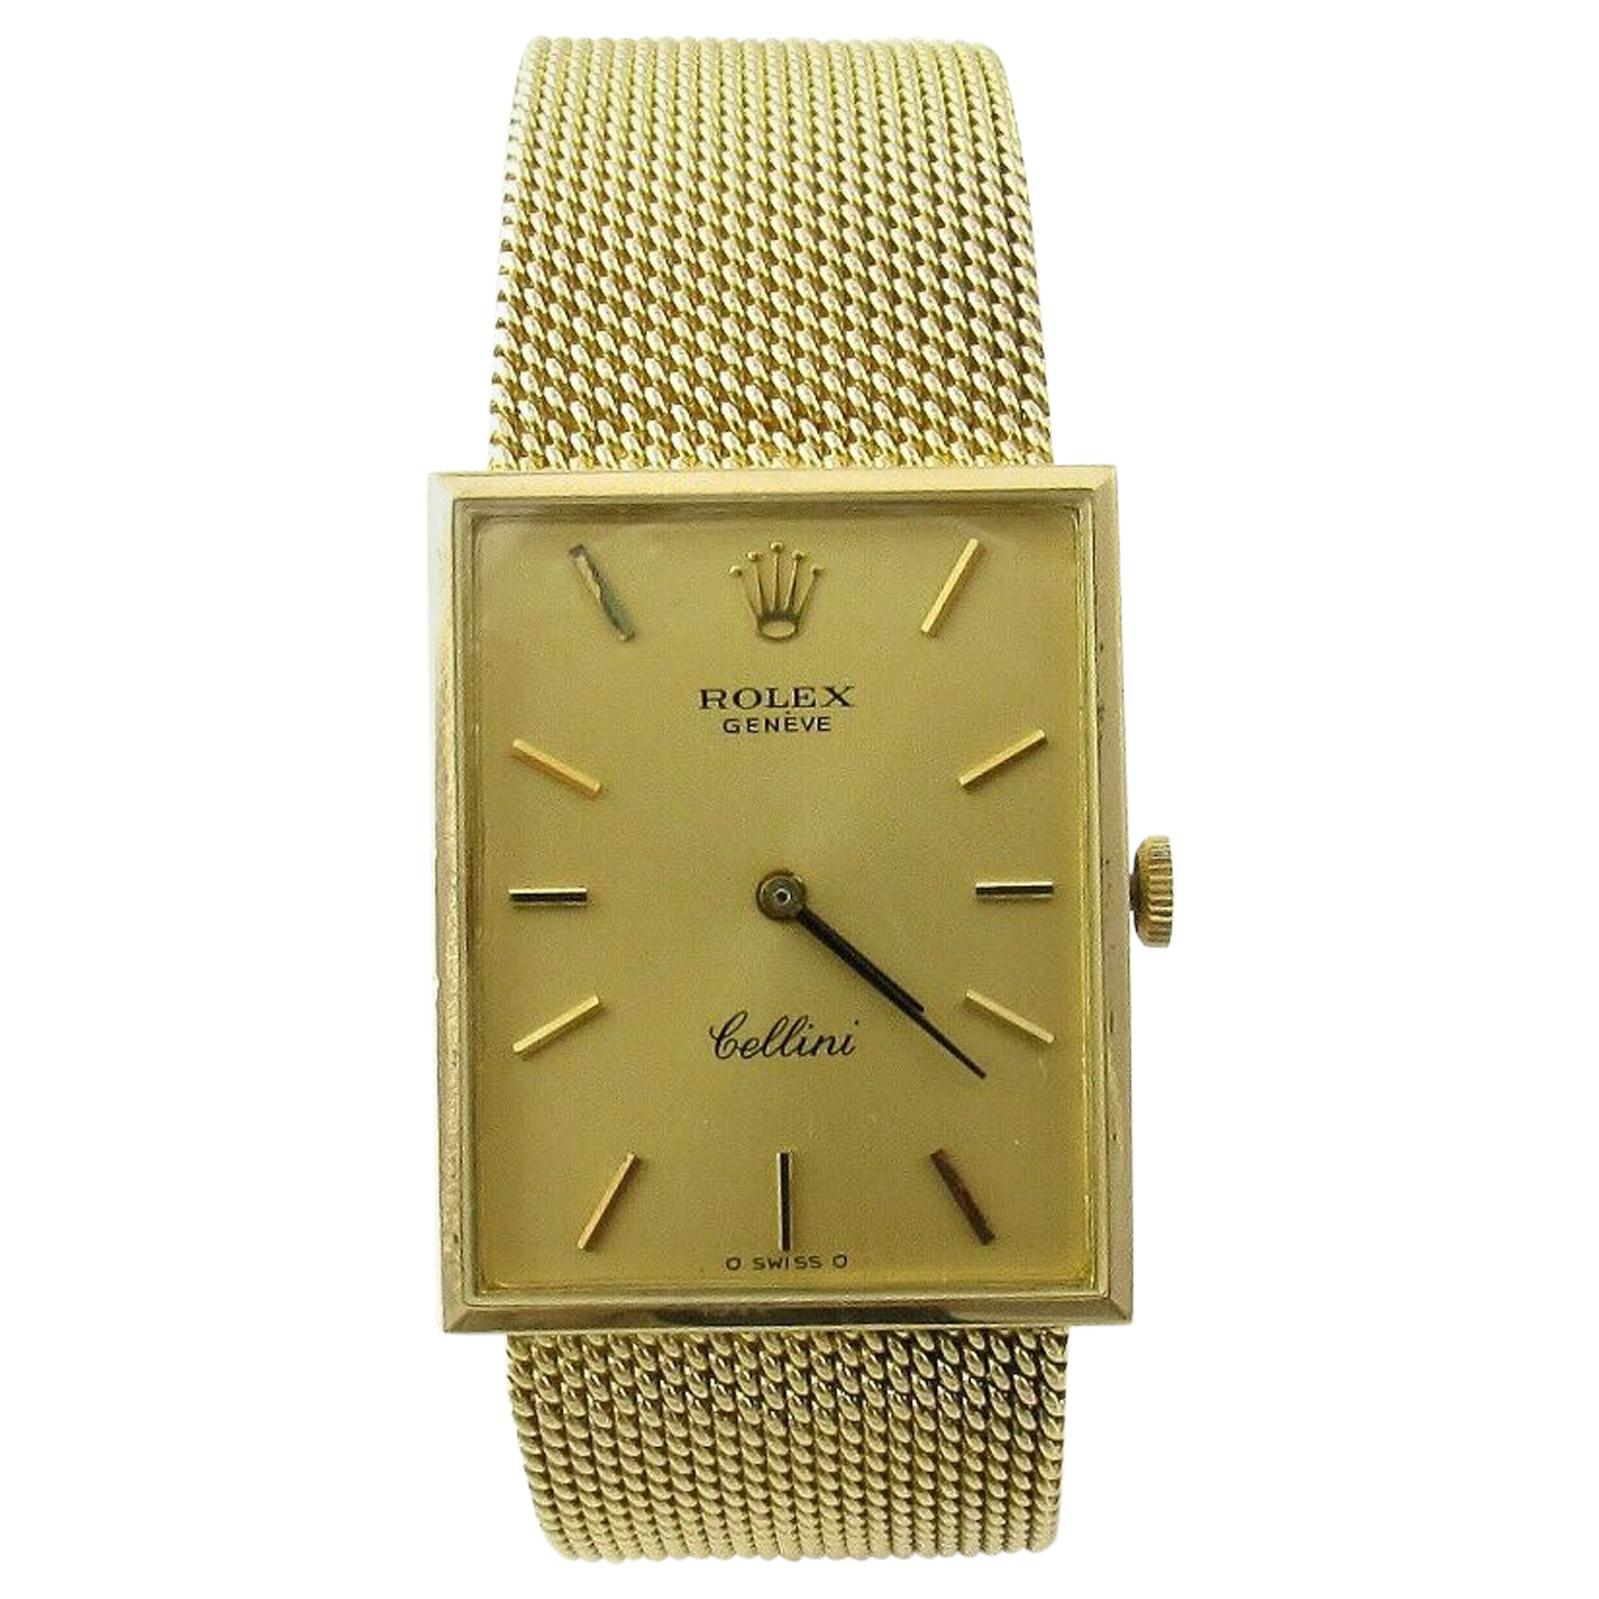 1970s Rolex 18 Karat Yellow Gold Cellini Watch 4089 1600 Caliber Movement